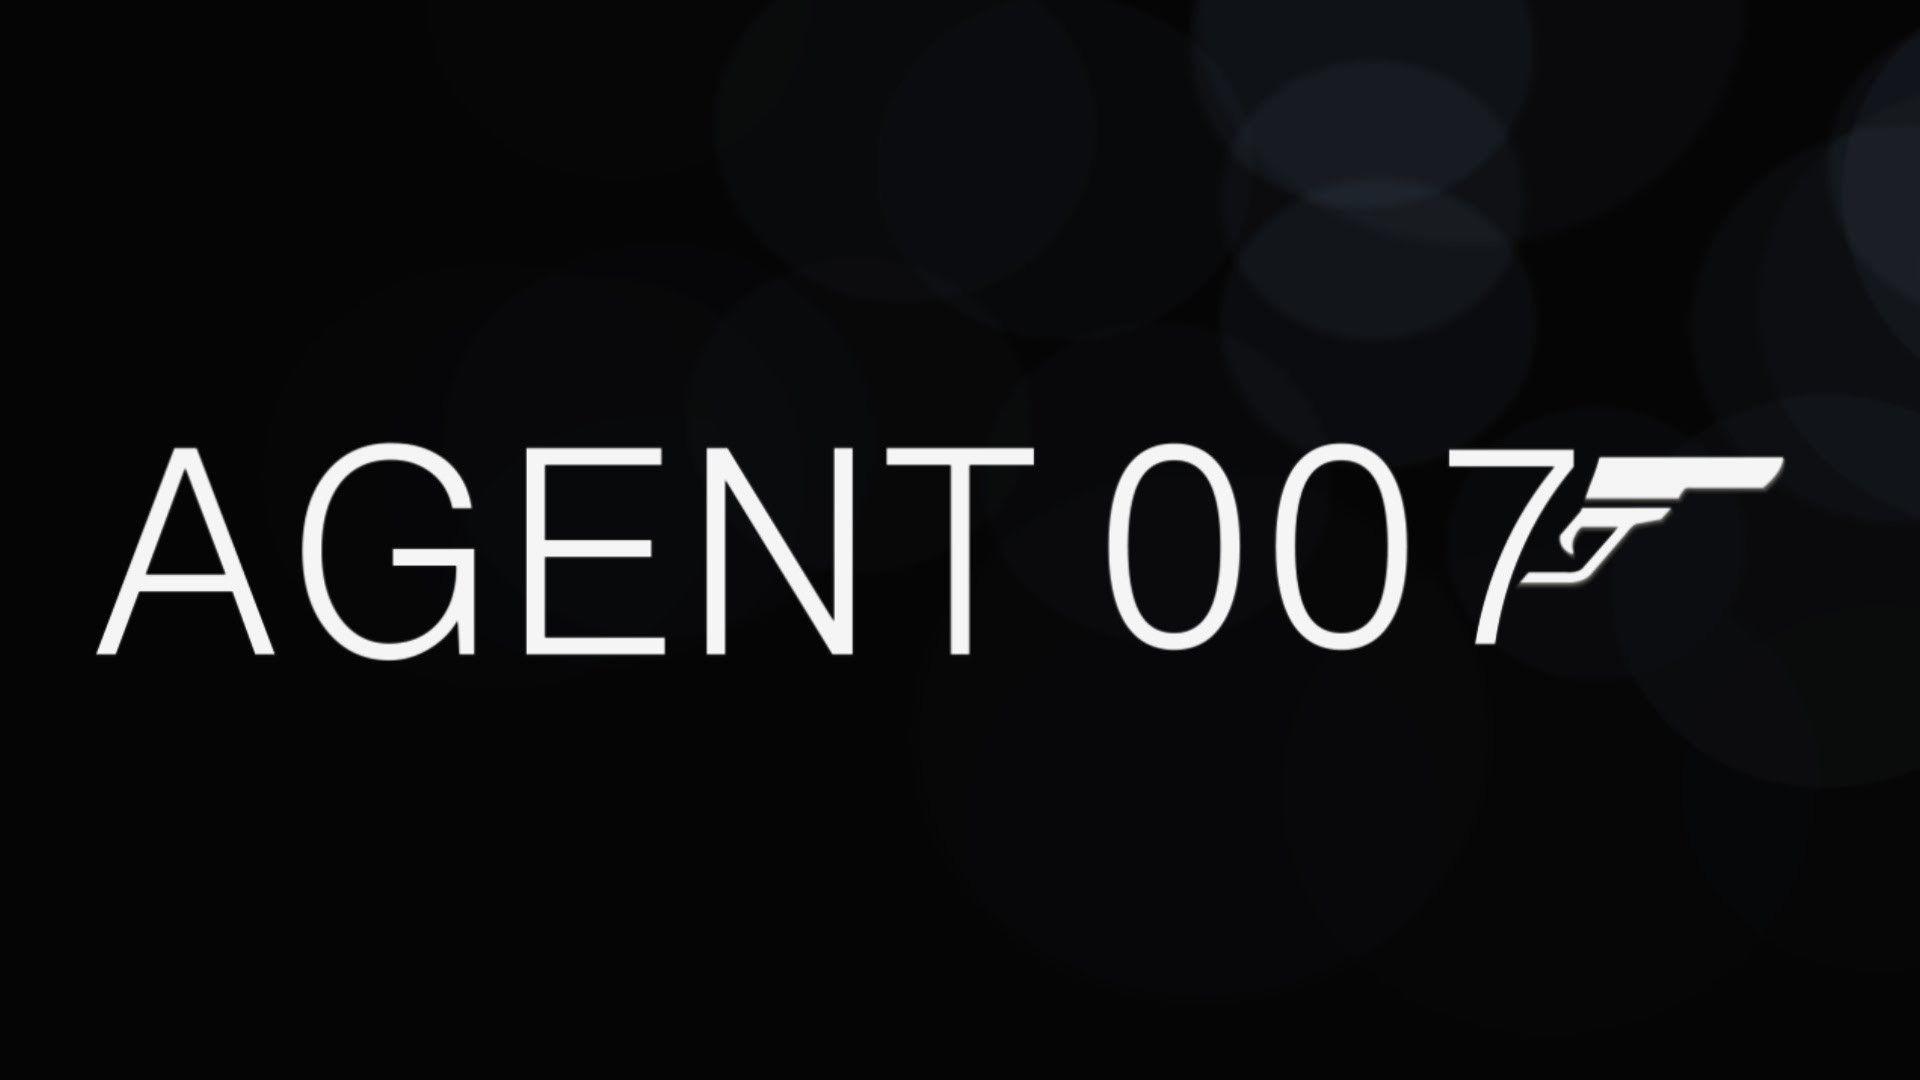 OO7 Logo - Logo Wallpaper